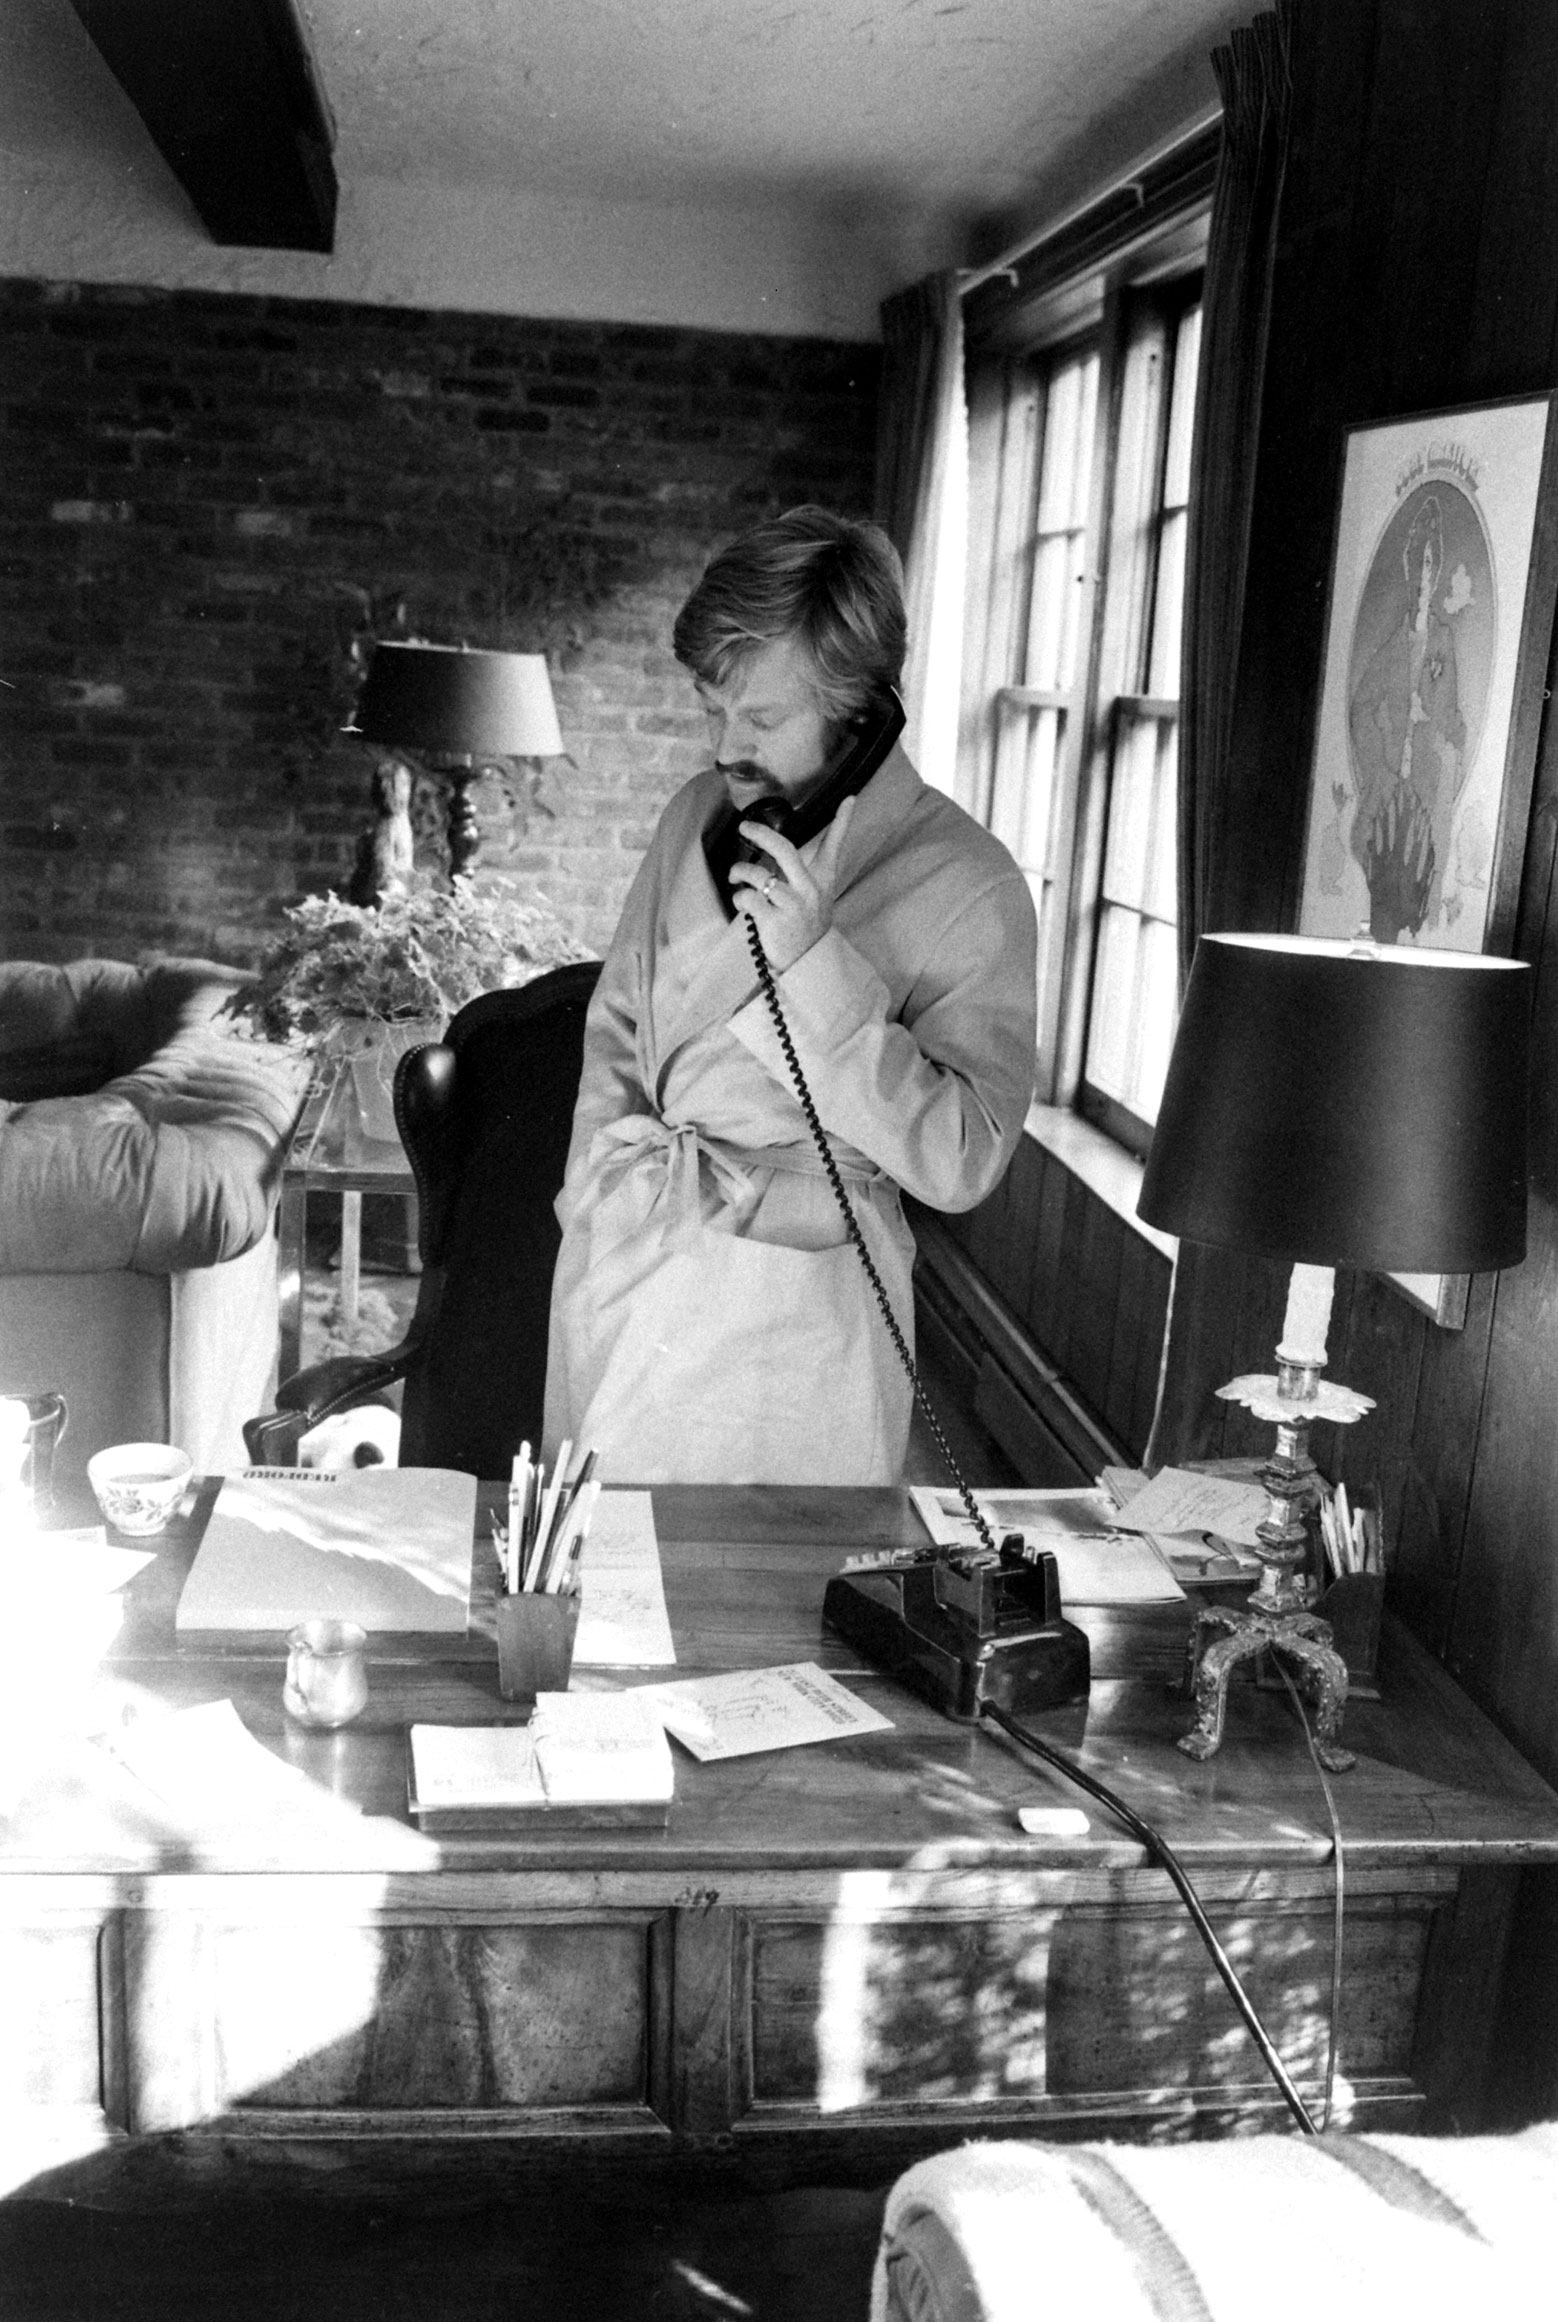 Robert Redford on the phone, 1971.